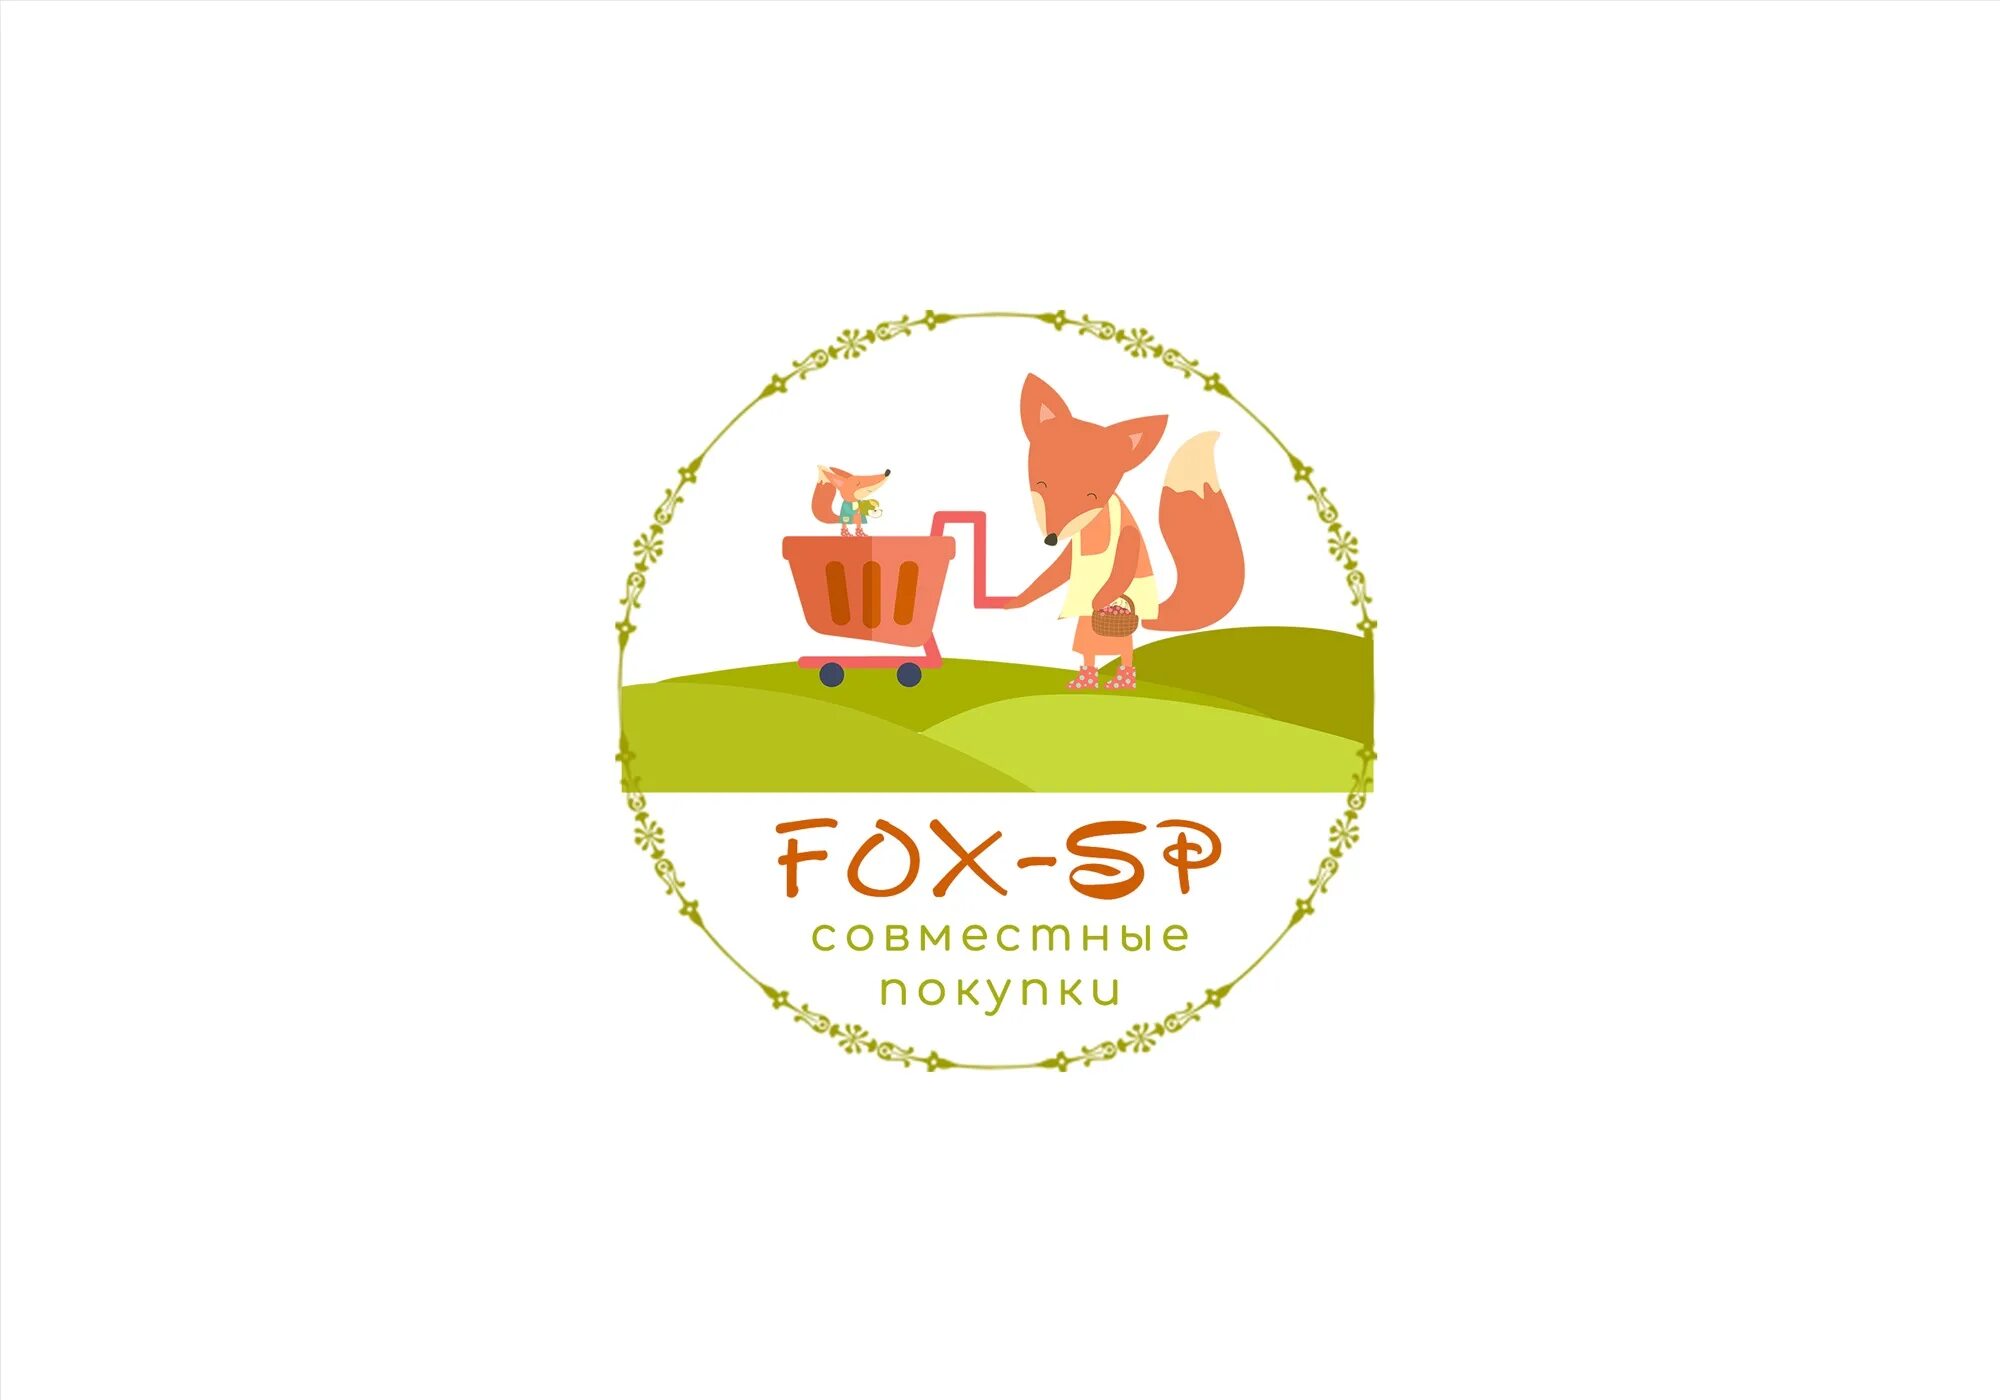 Фокс СП Ангарск. Fox логотип магазина. Карта магазина Фокс. Фокс магазин обуви логотип. Интернет магазин fox